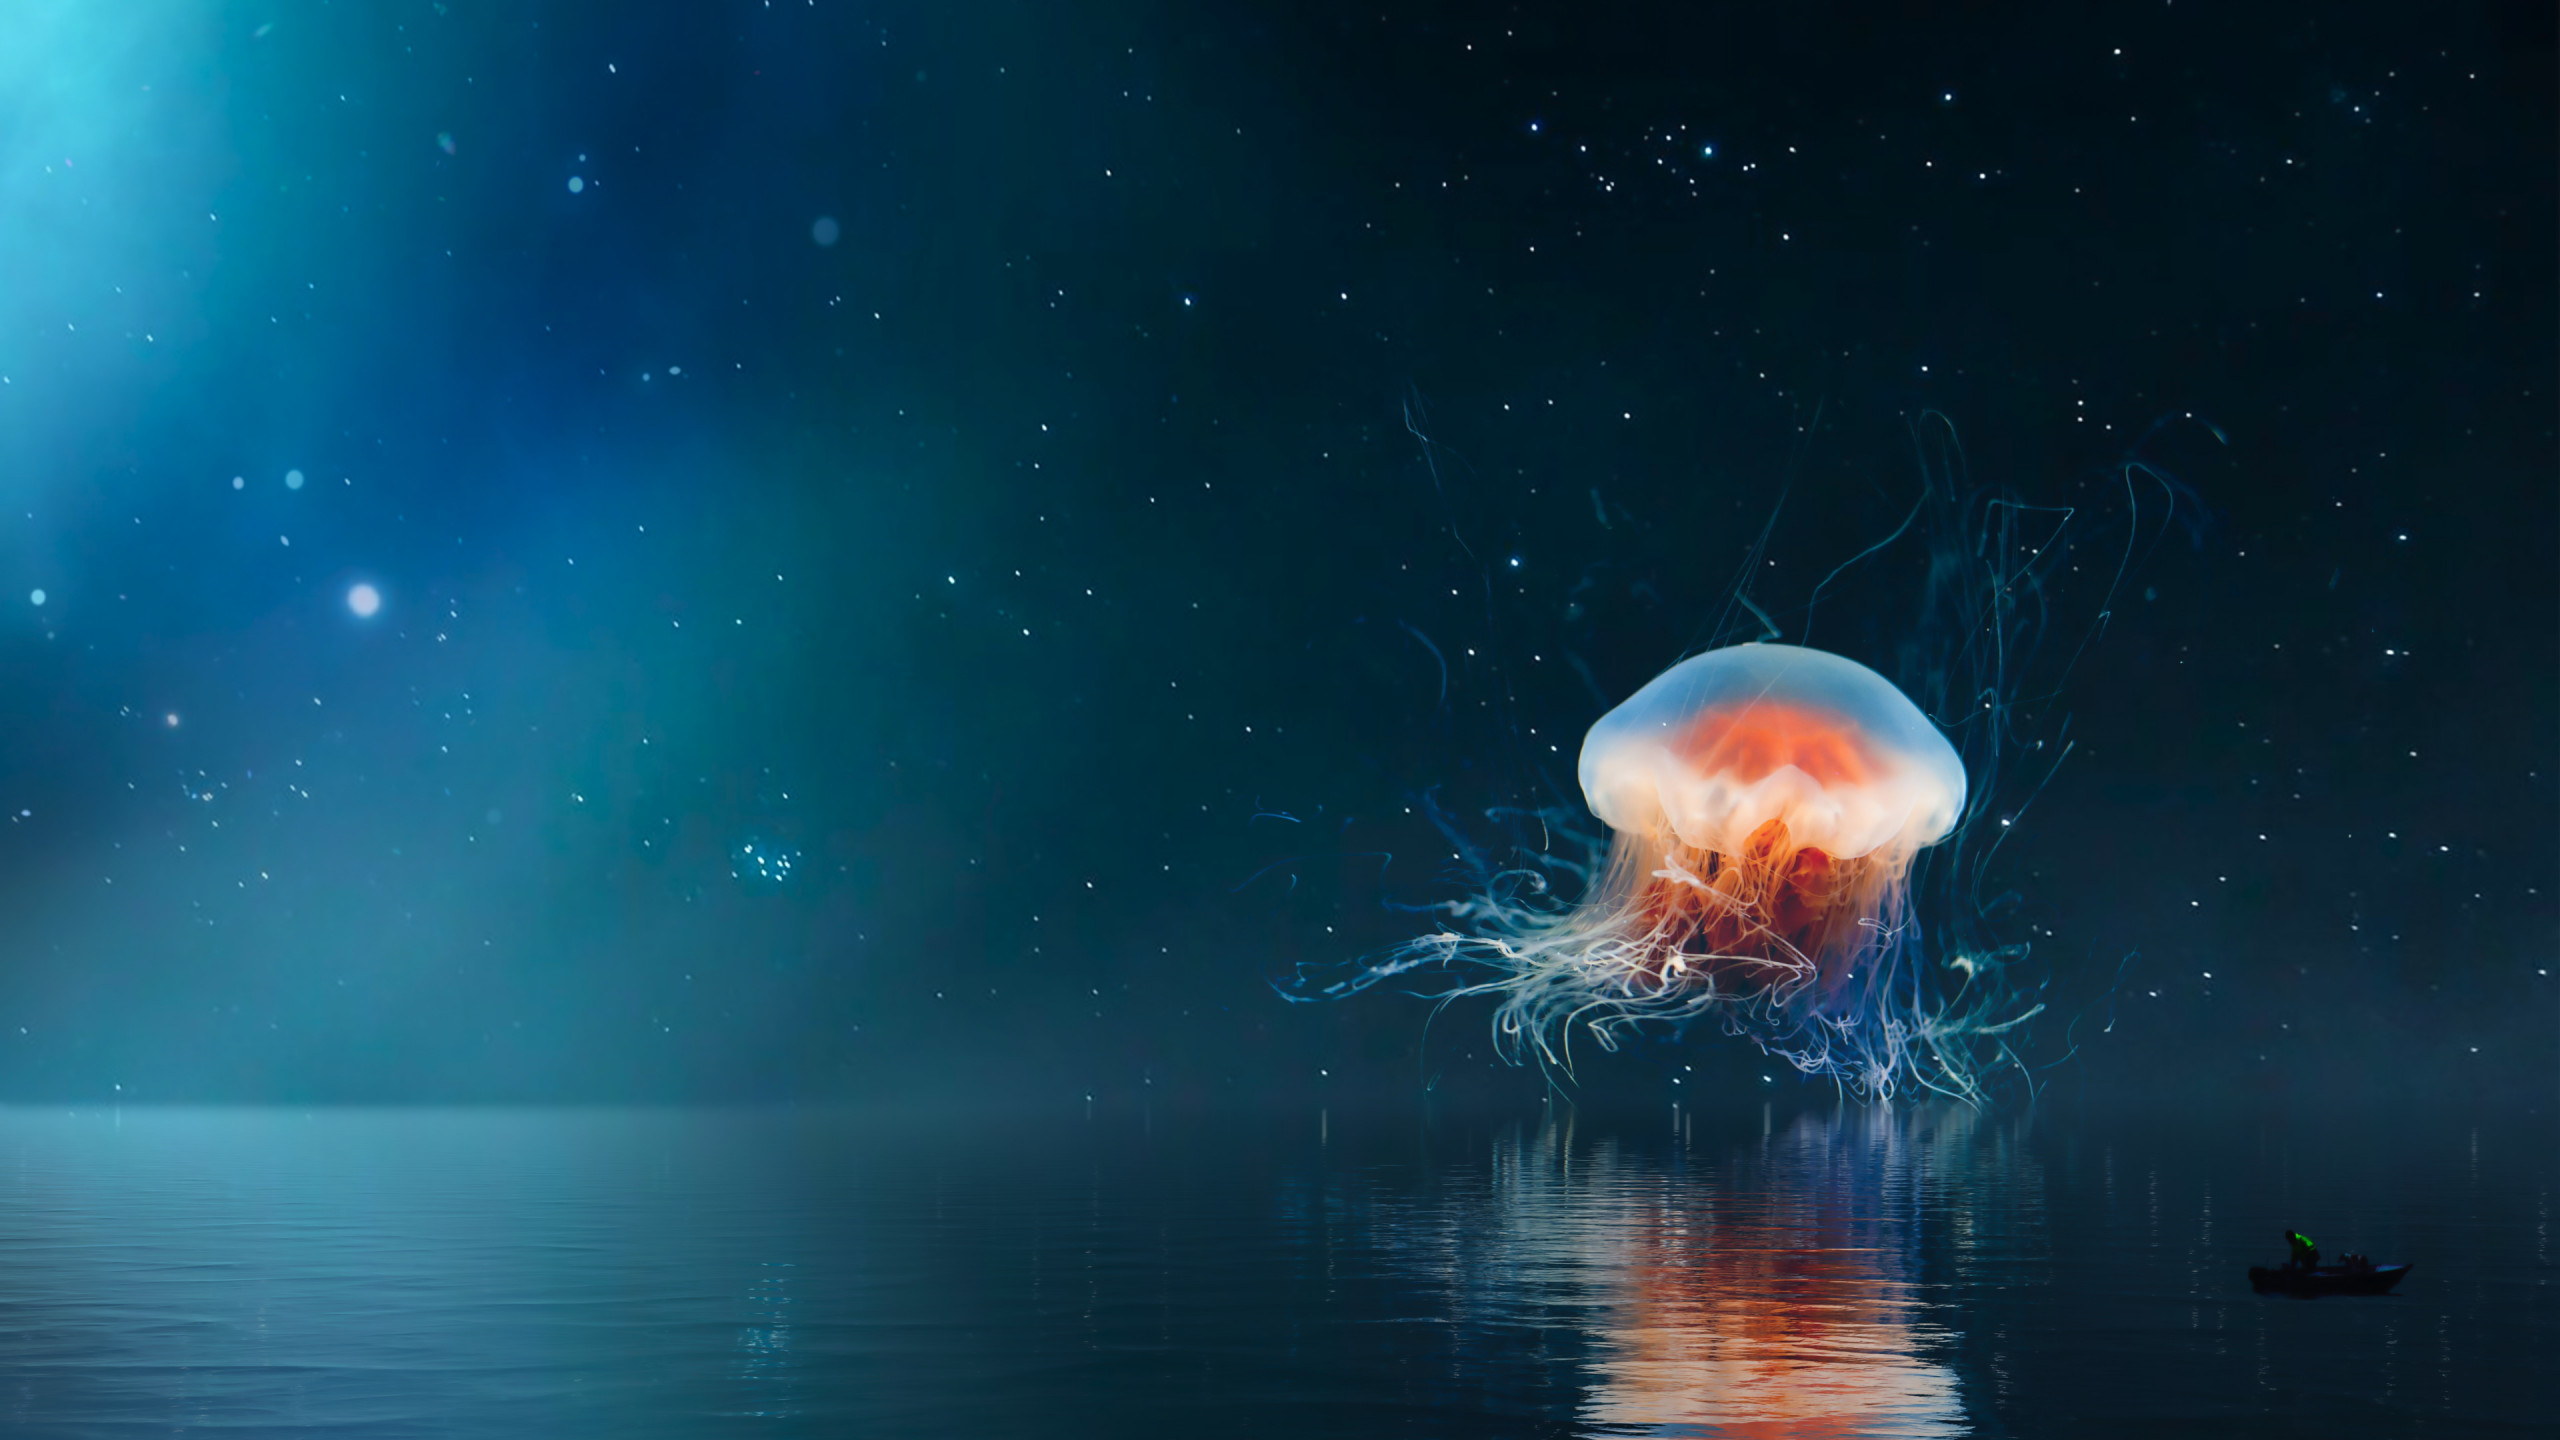 Jellyfish on the night sky wallpaper 2560x1440